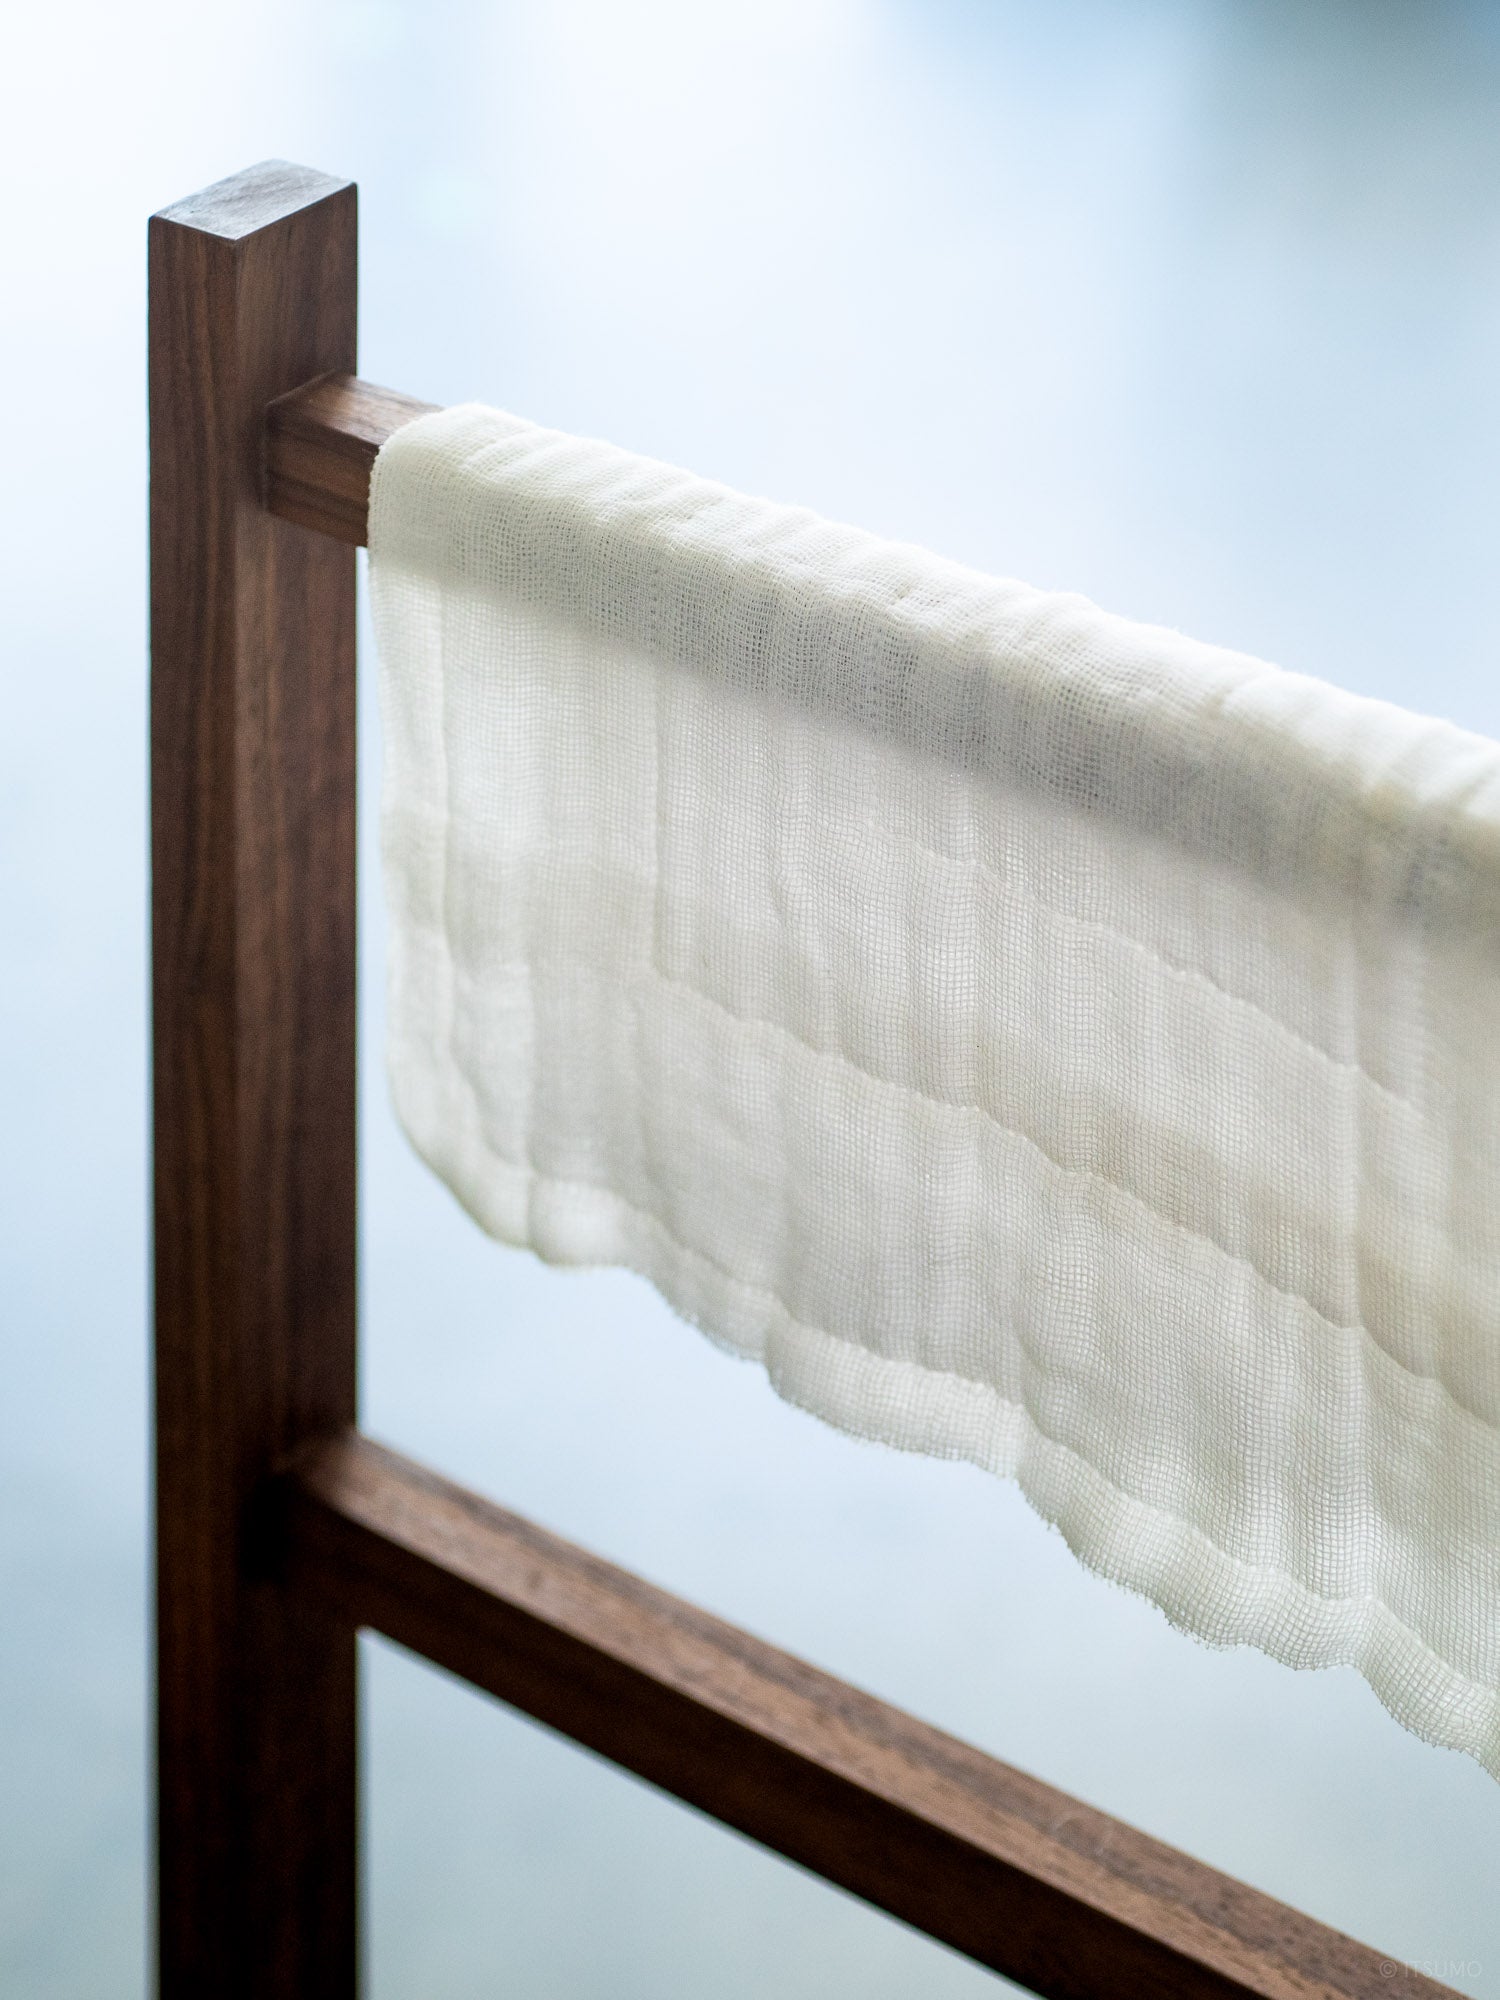 White Azmaya cleaning cloth made of japanese kaya mosquito nets hanging to dry